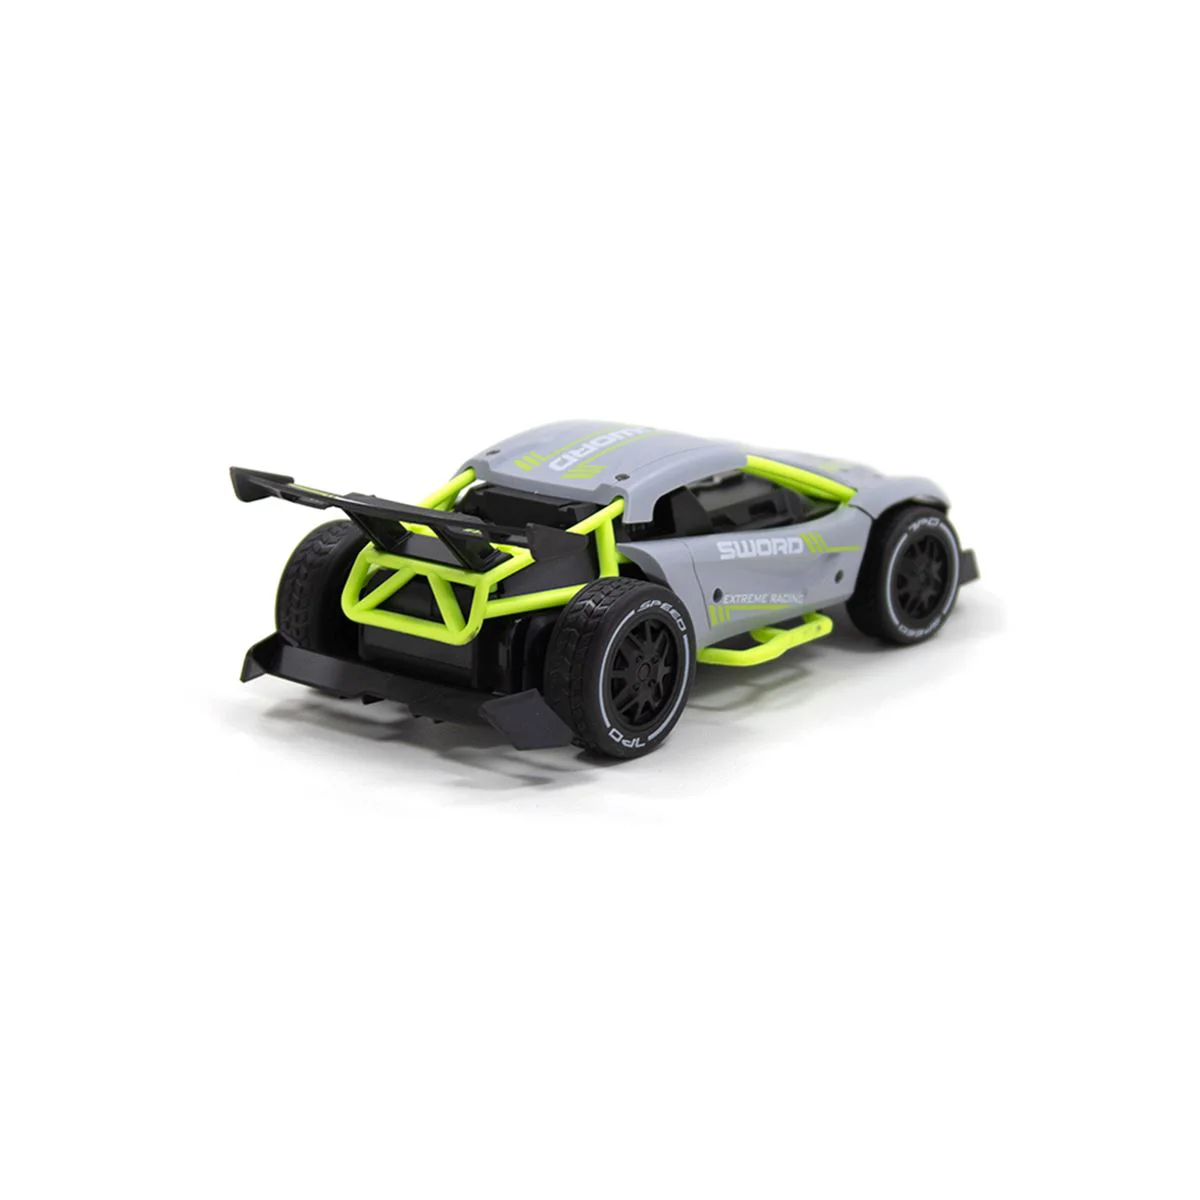 Masina cu telecomanda Sulong Toys Speed Racing Drift Sword, 1:24